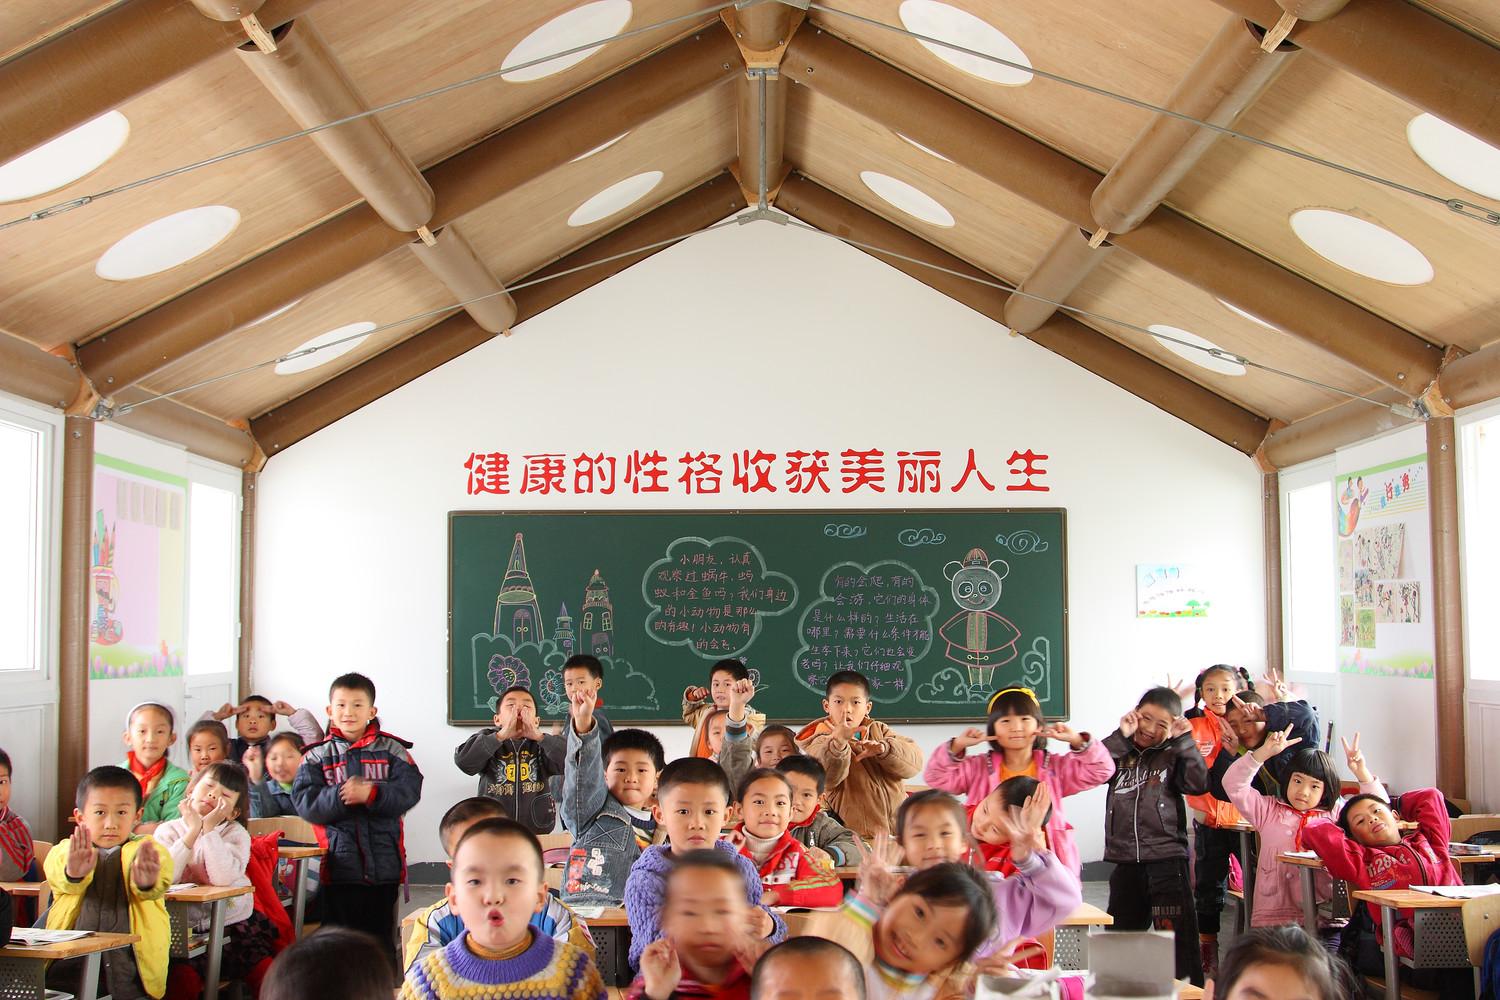 Interior, classroom with children